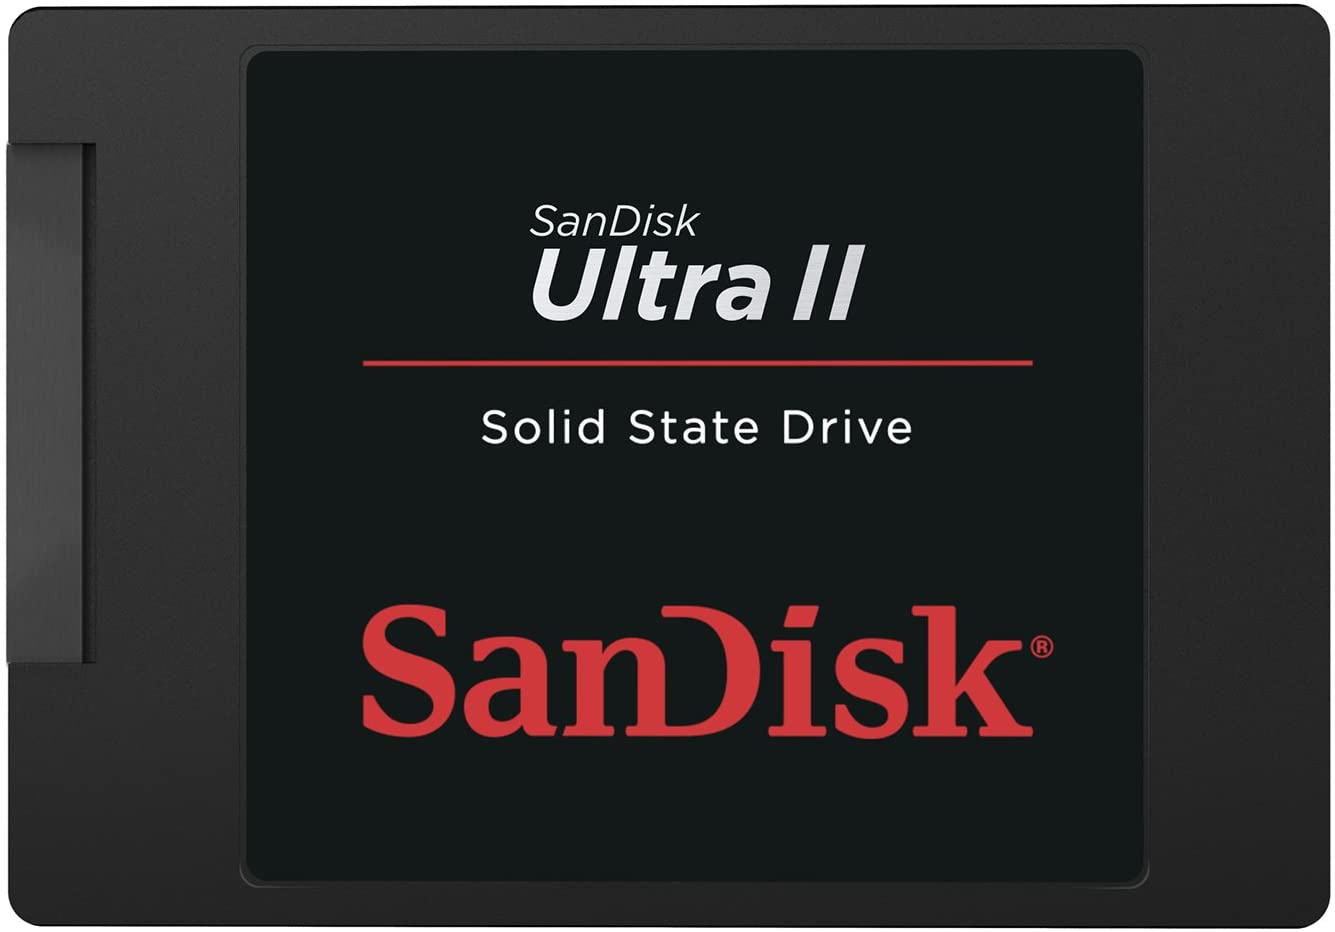  SanDisk Ultra II 960GB Solid State Drive